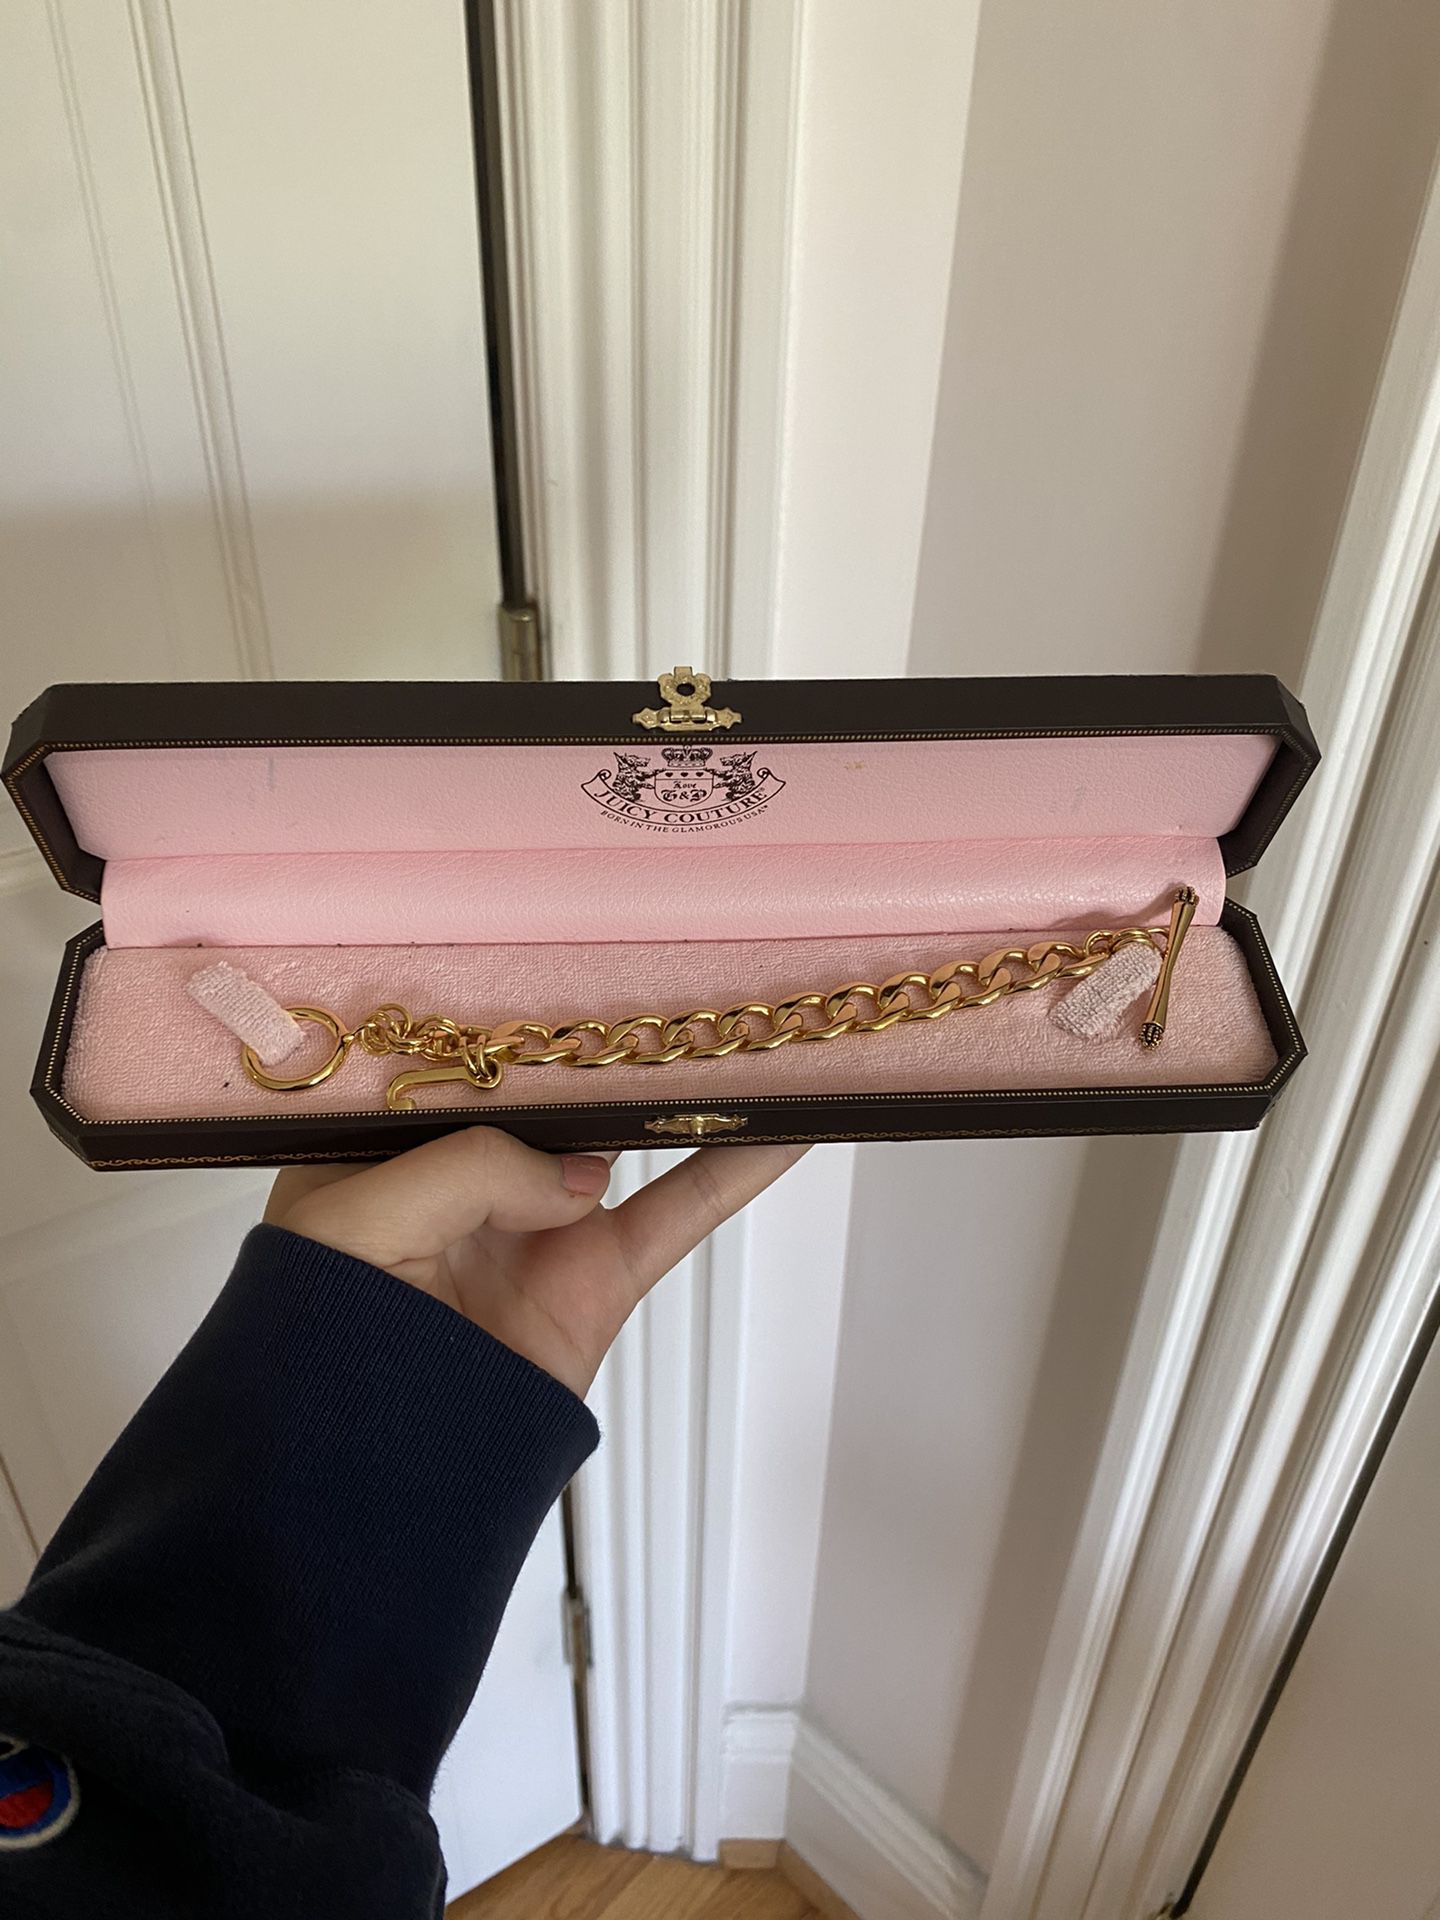 Juicy couture gold chain bracelet